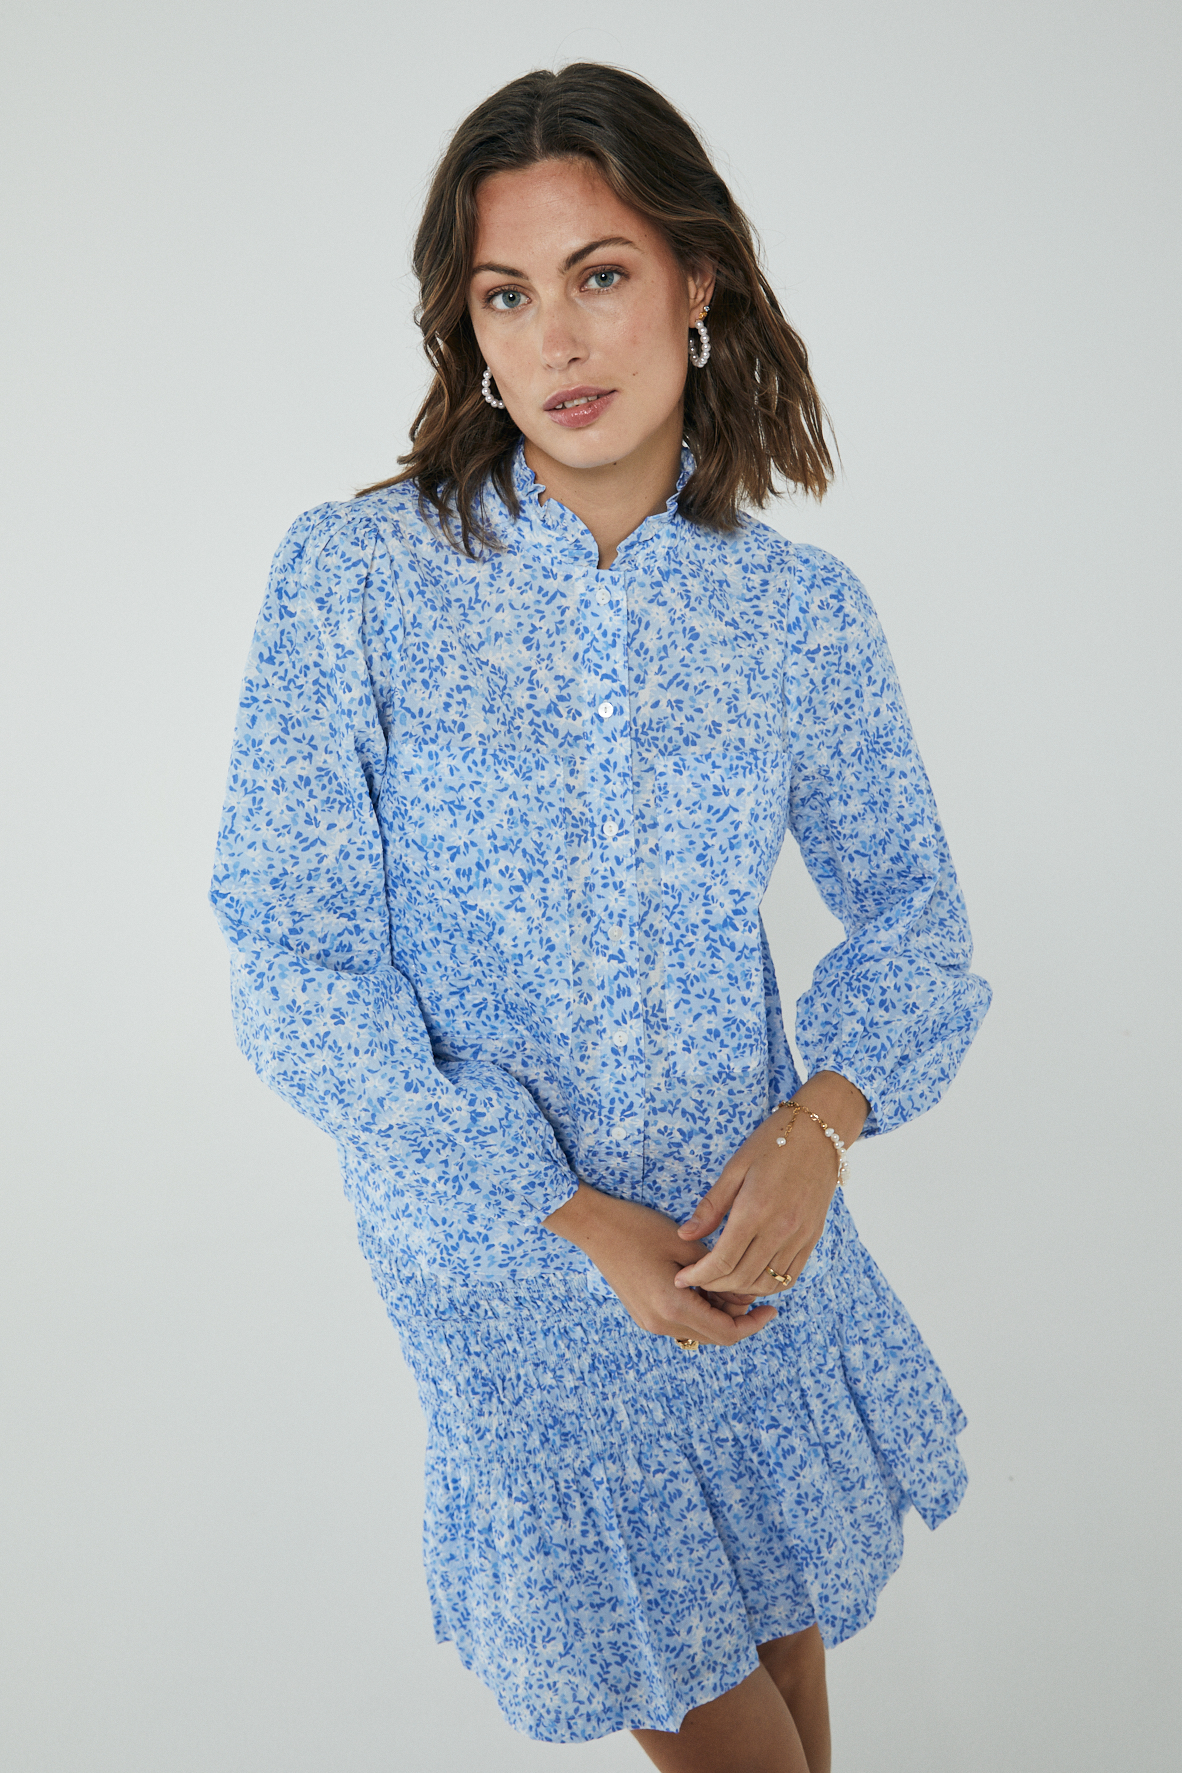 Tiffany Blue Print Shirt closeup